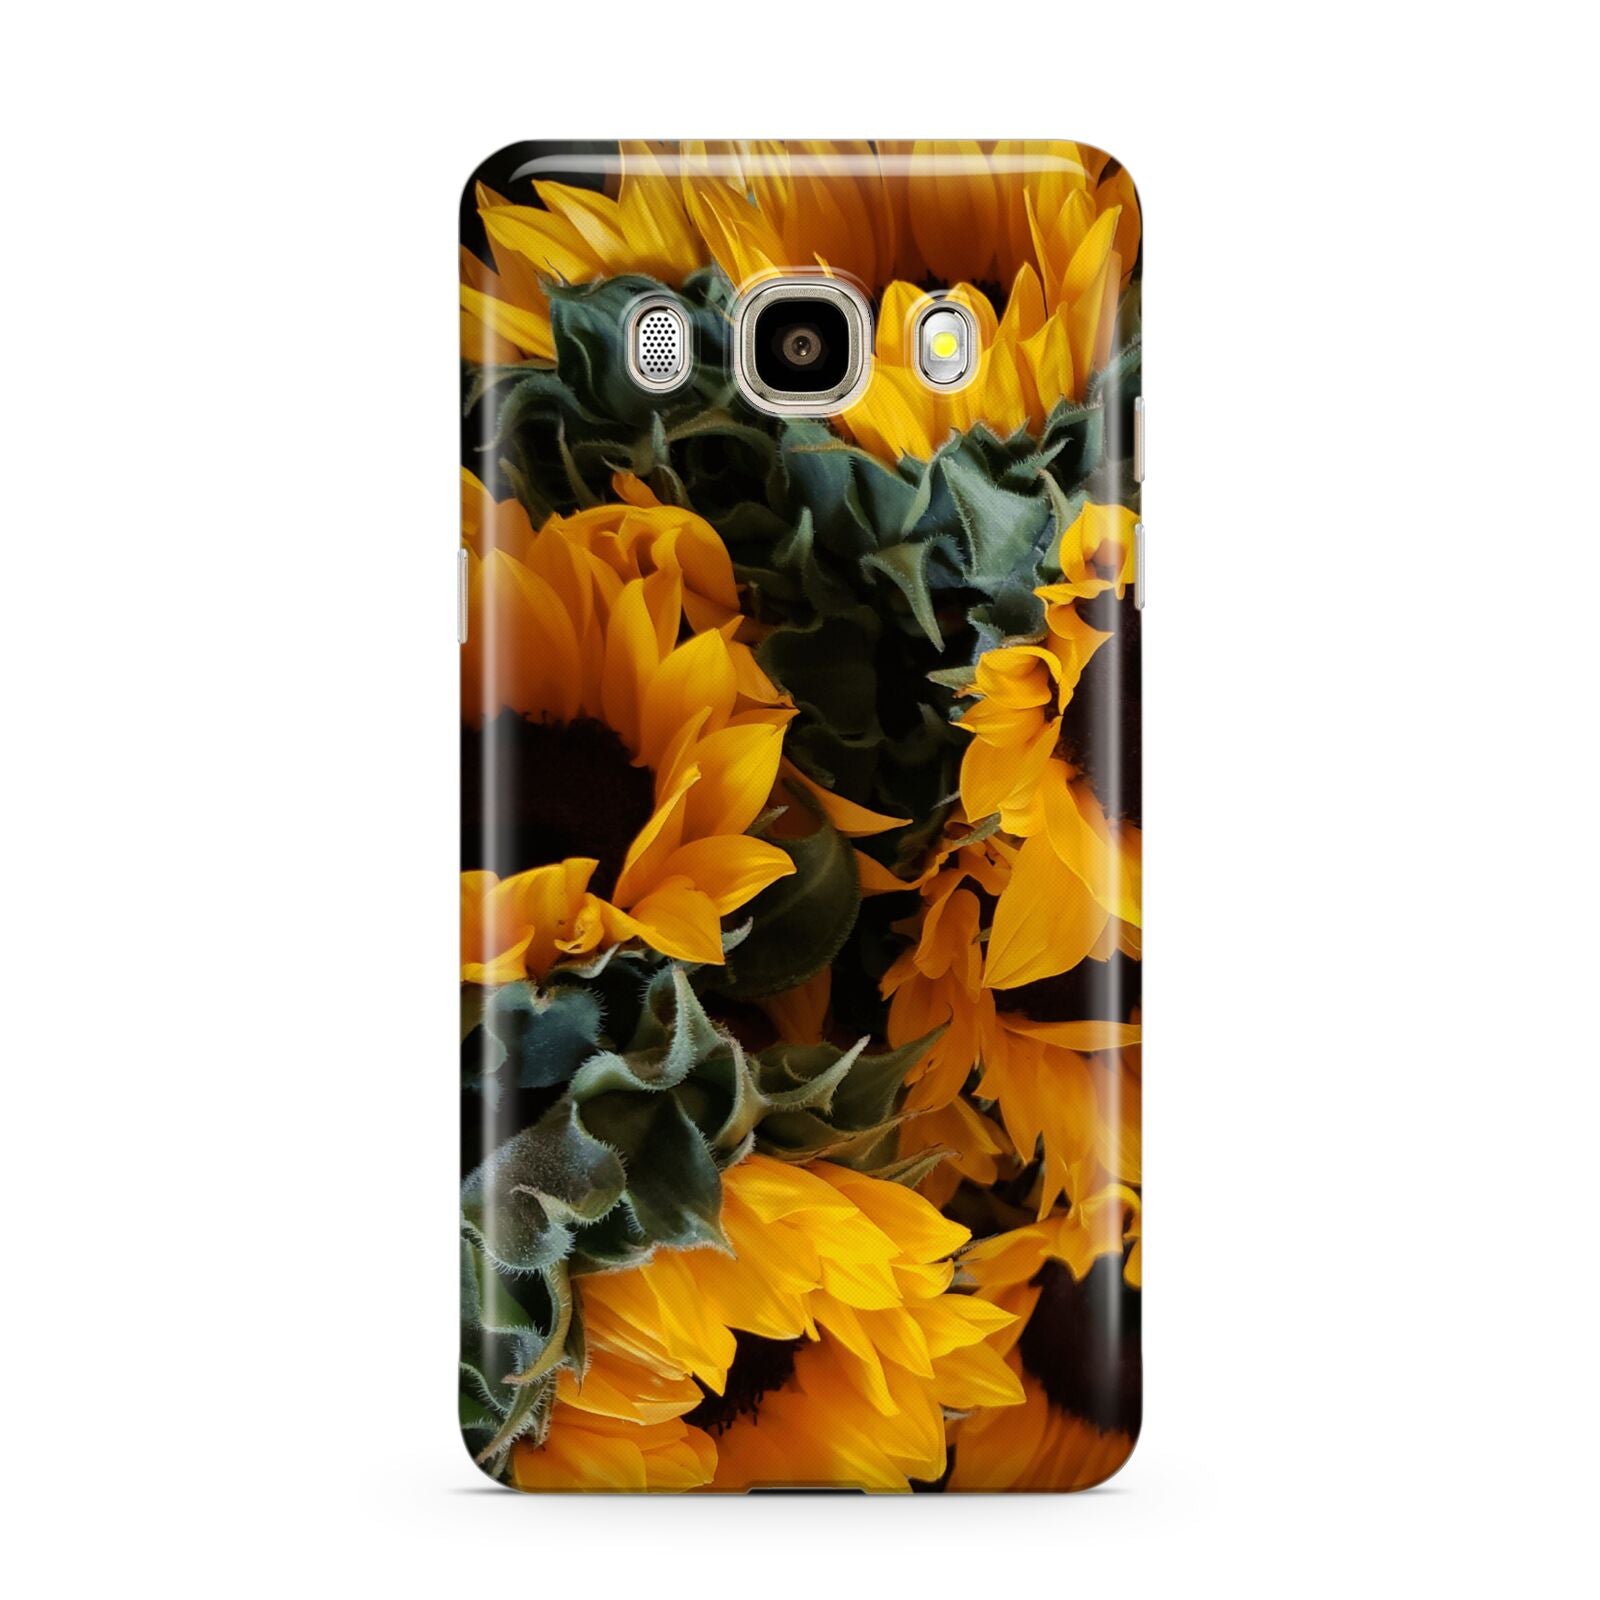 Sunflower Samsung Galaxy J7 2016 Case on gold phone